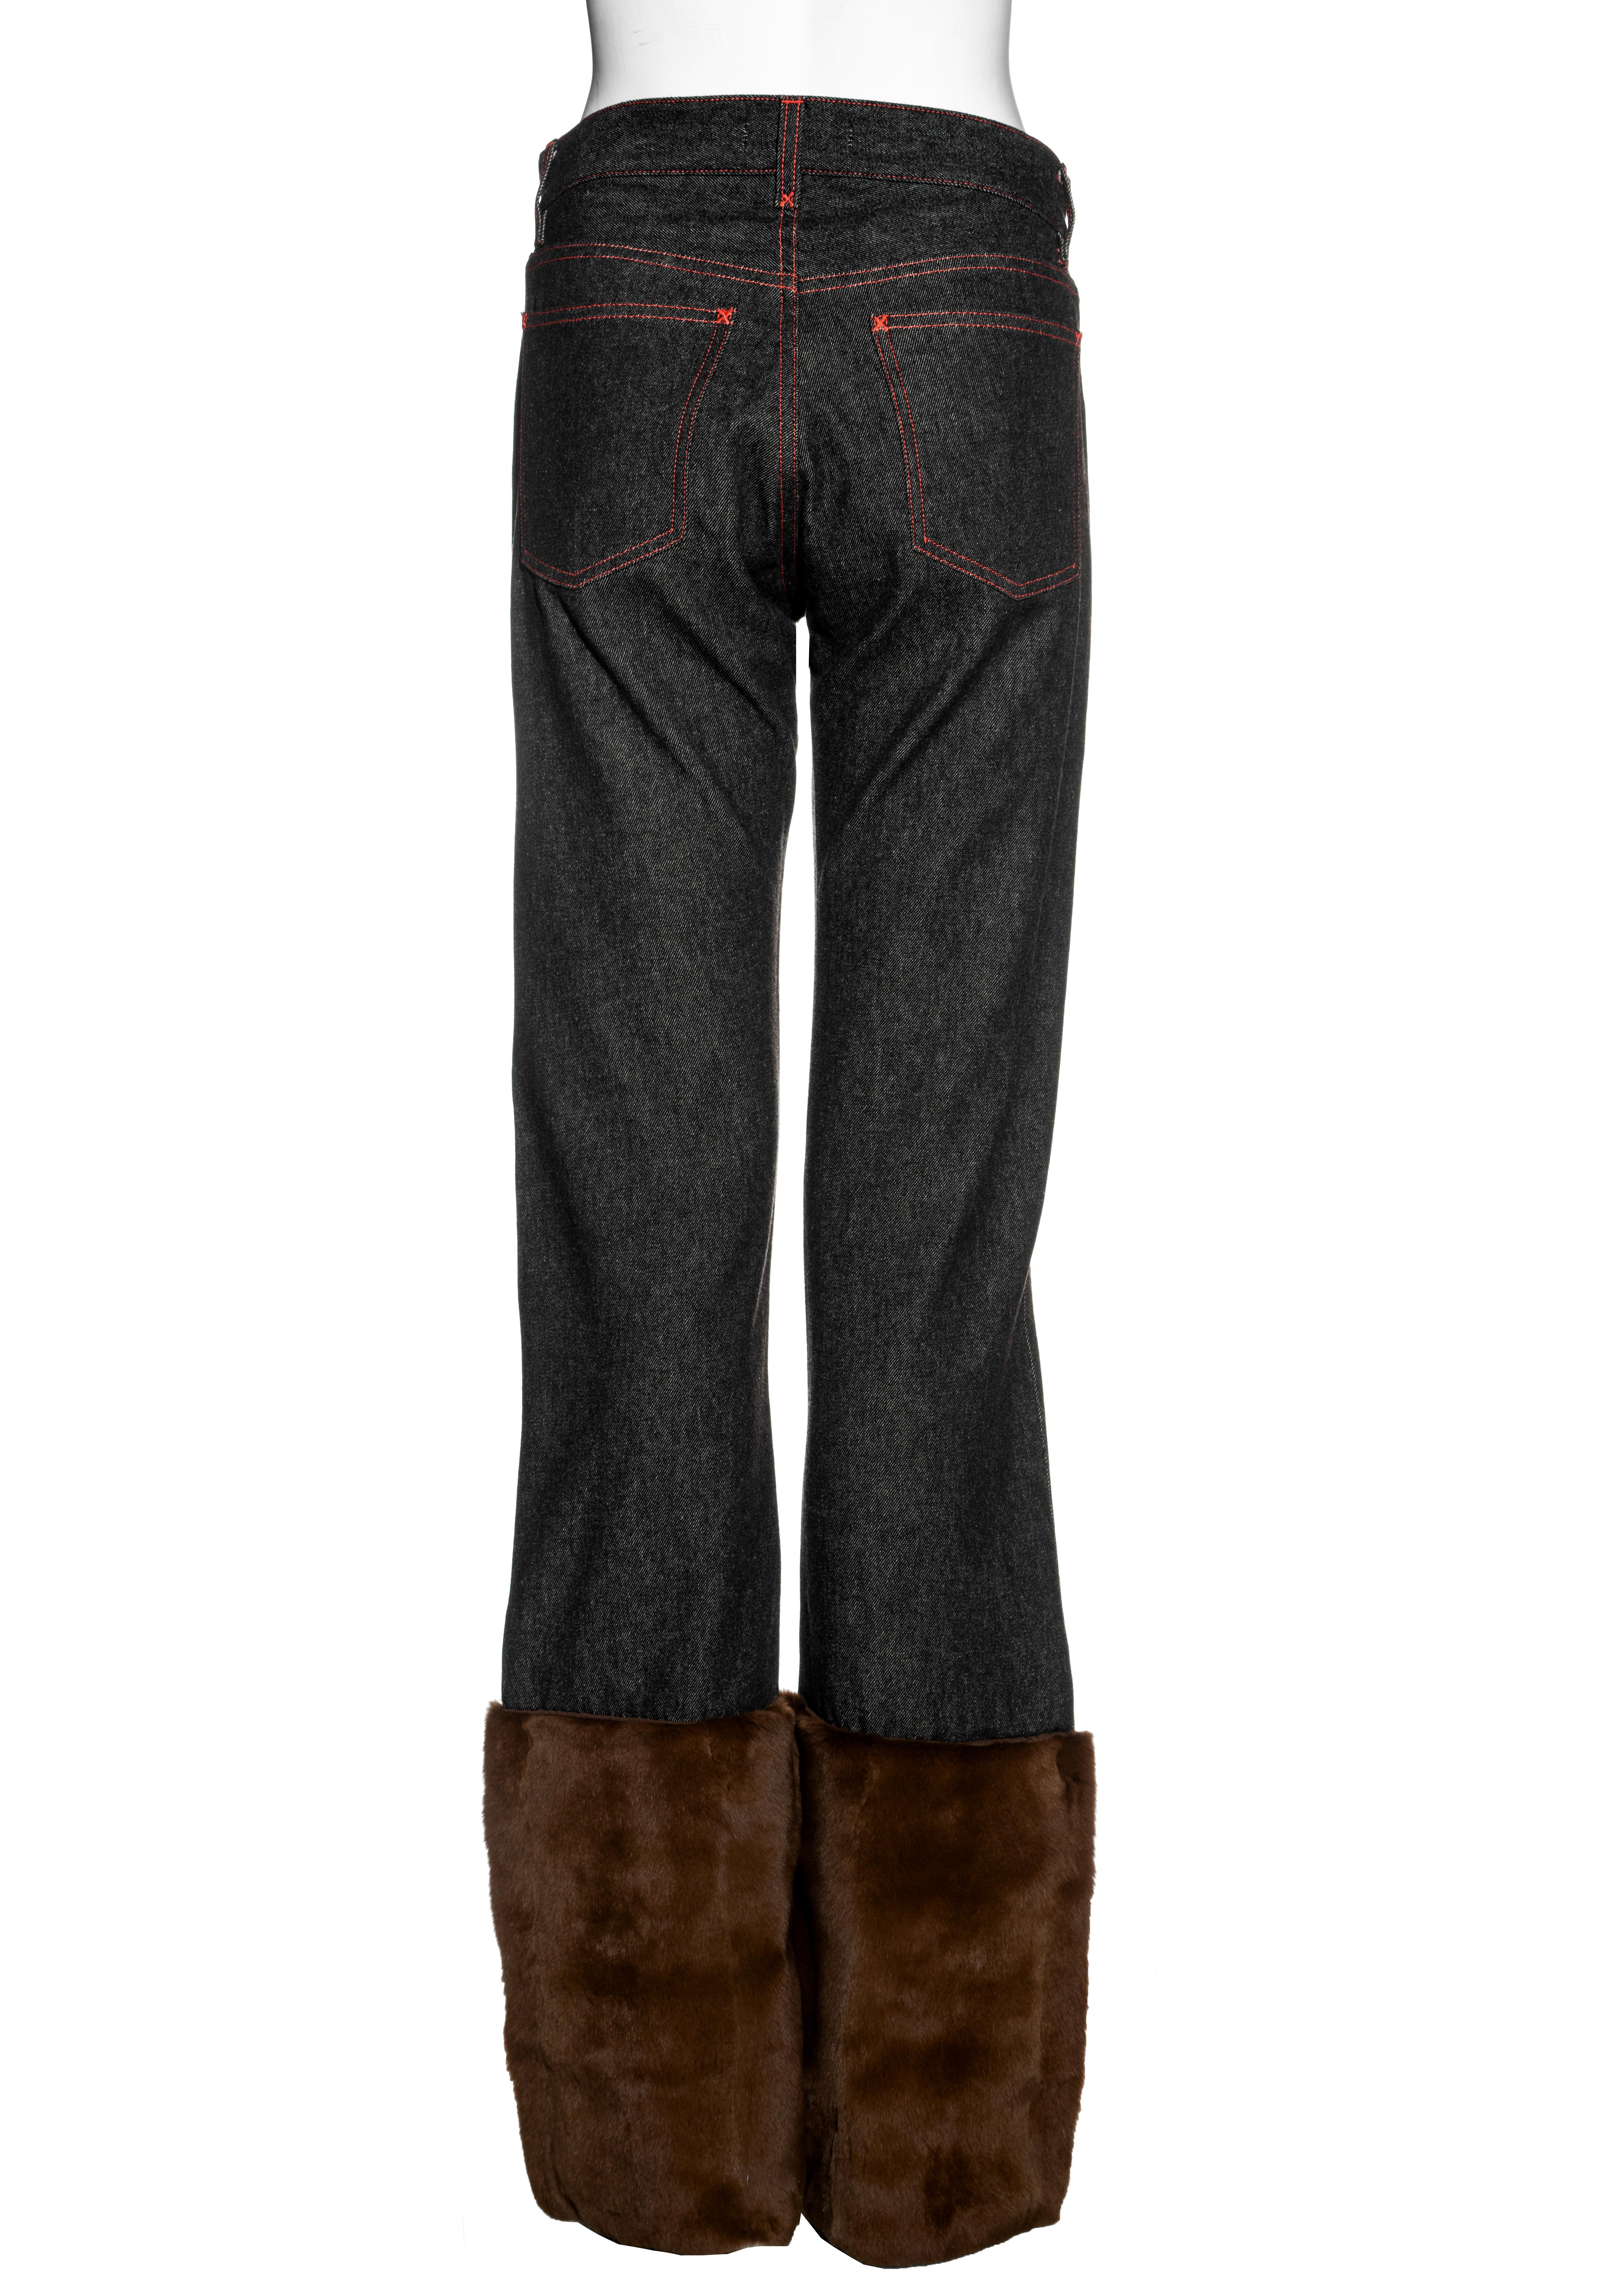 Dolce & Gabbana unisex black denim jeans with brown fur, fw 1999 3